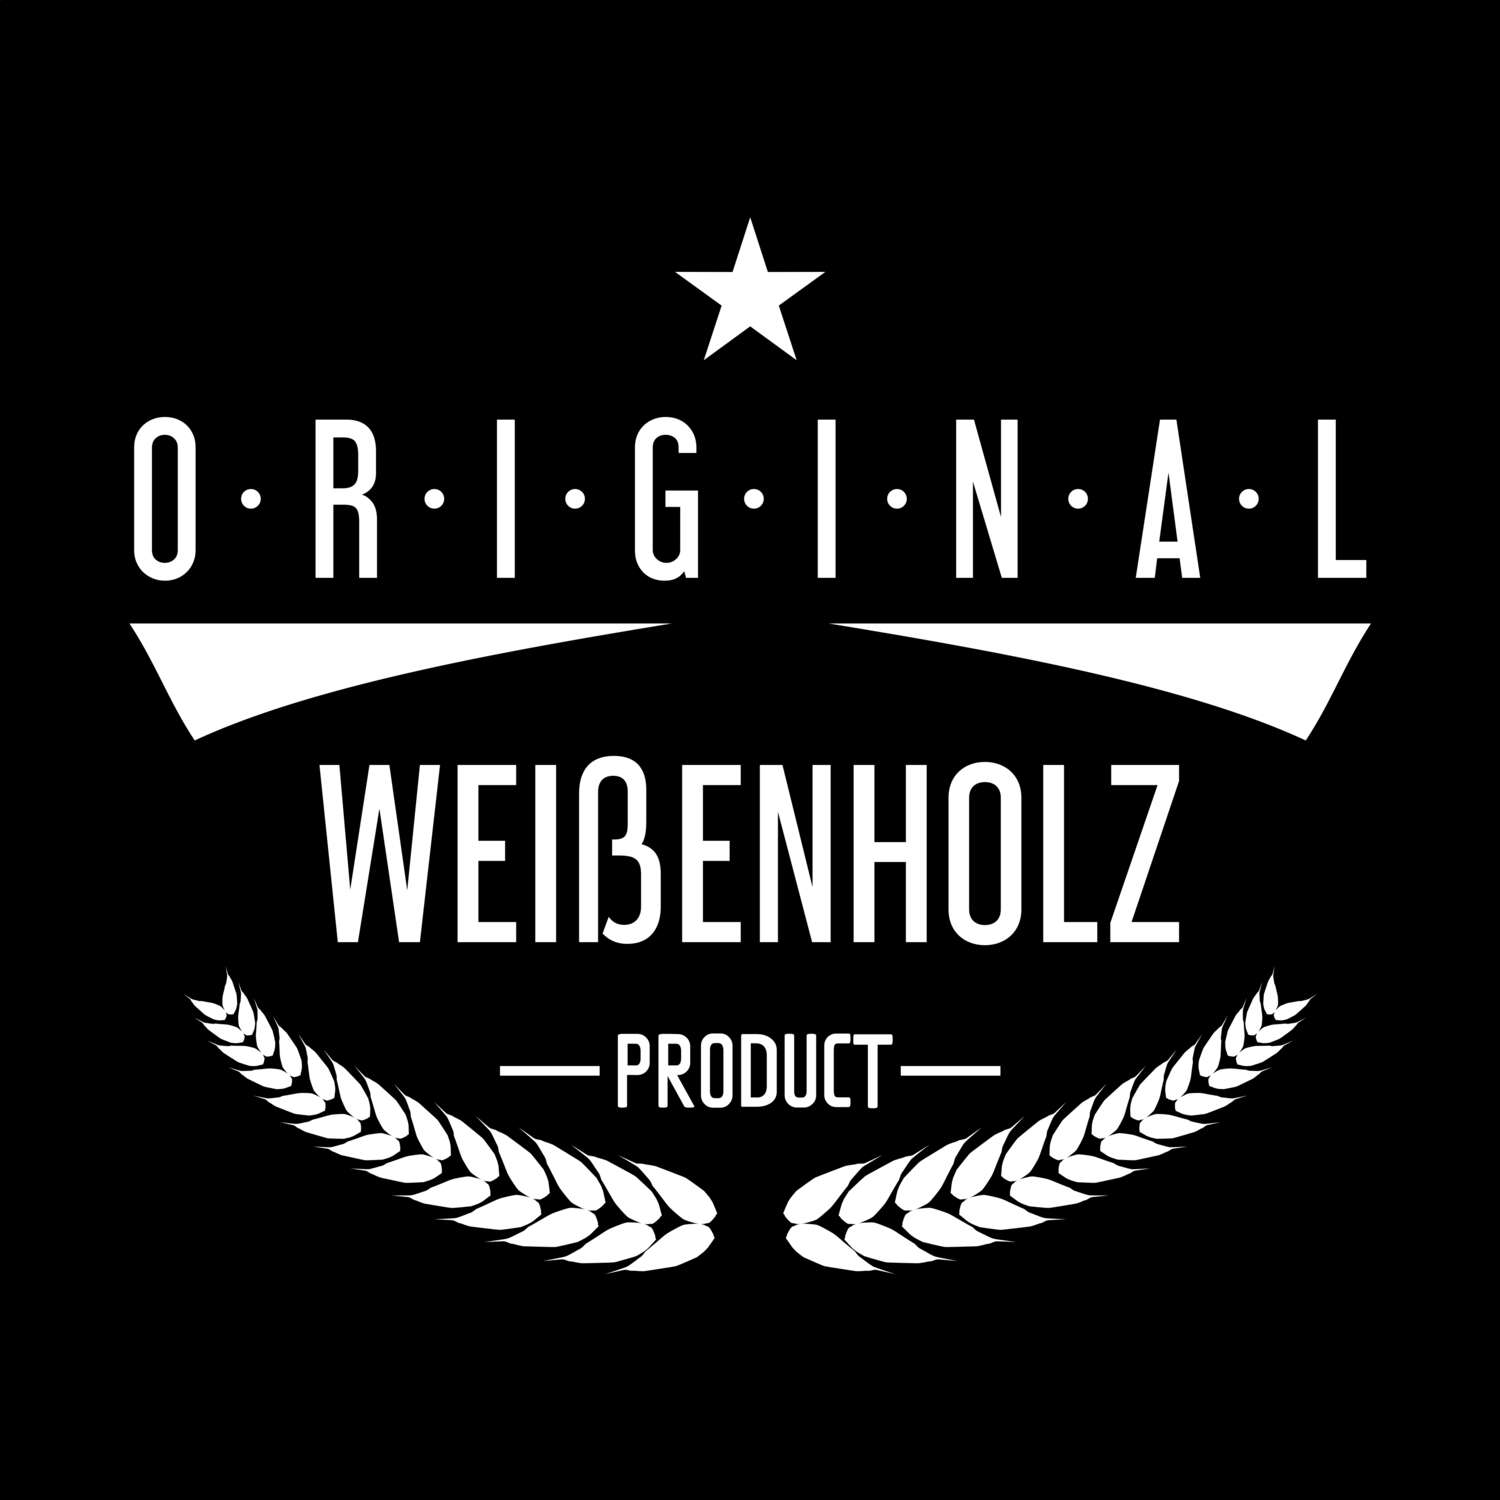 Weißenholz T-Shirt »Original Product«